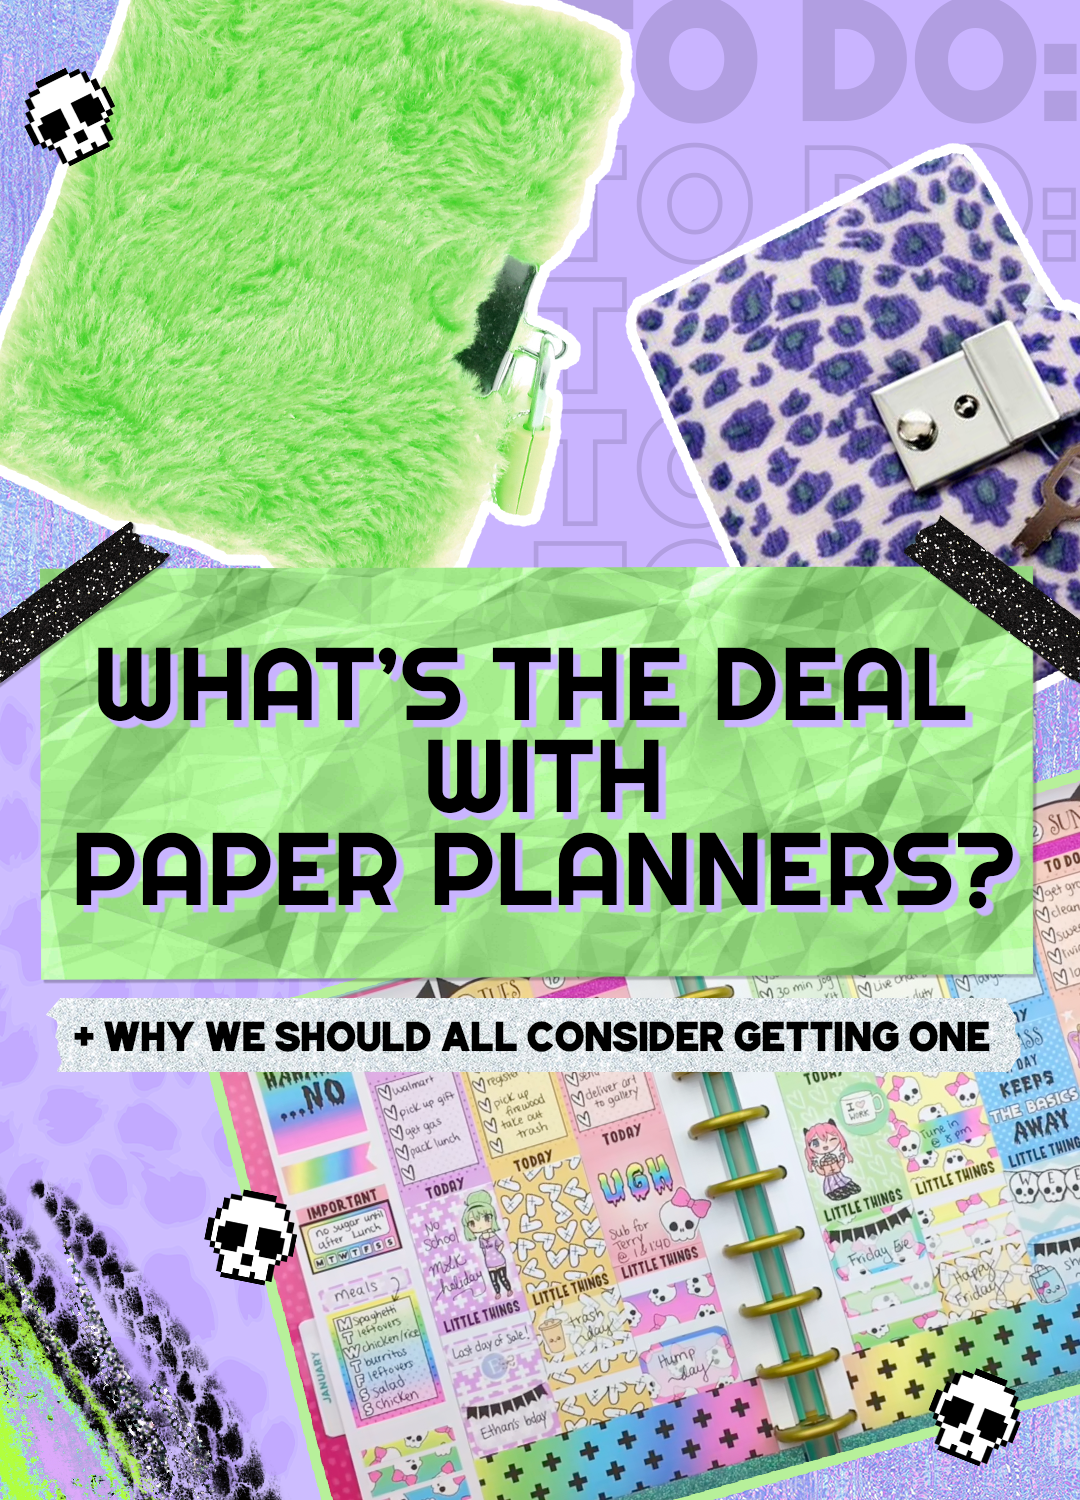 paper planner trend furry retro diary green purple